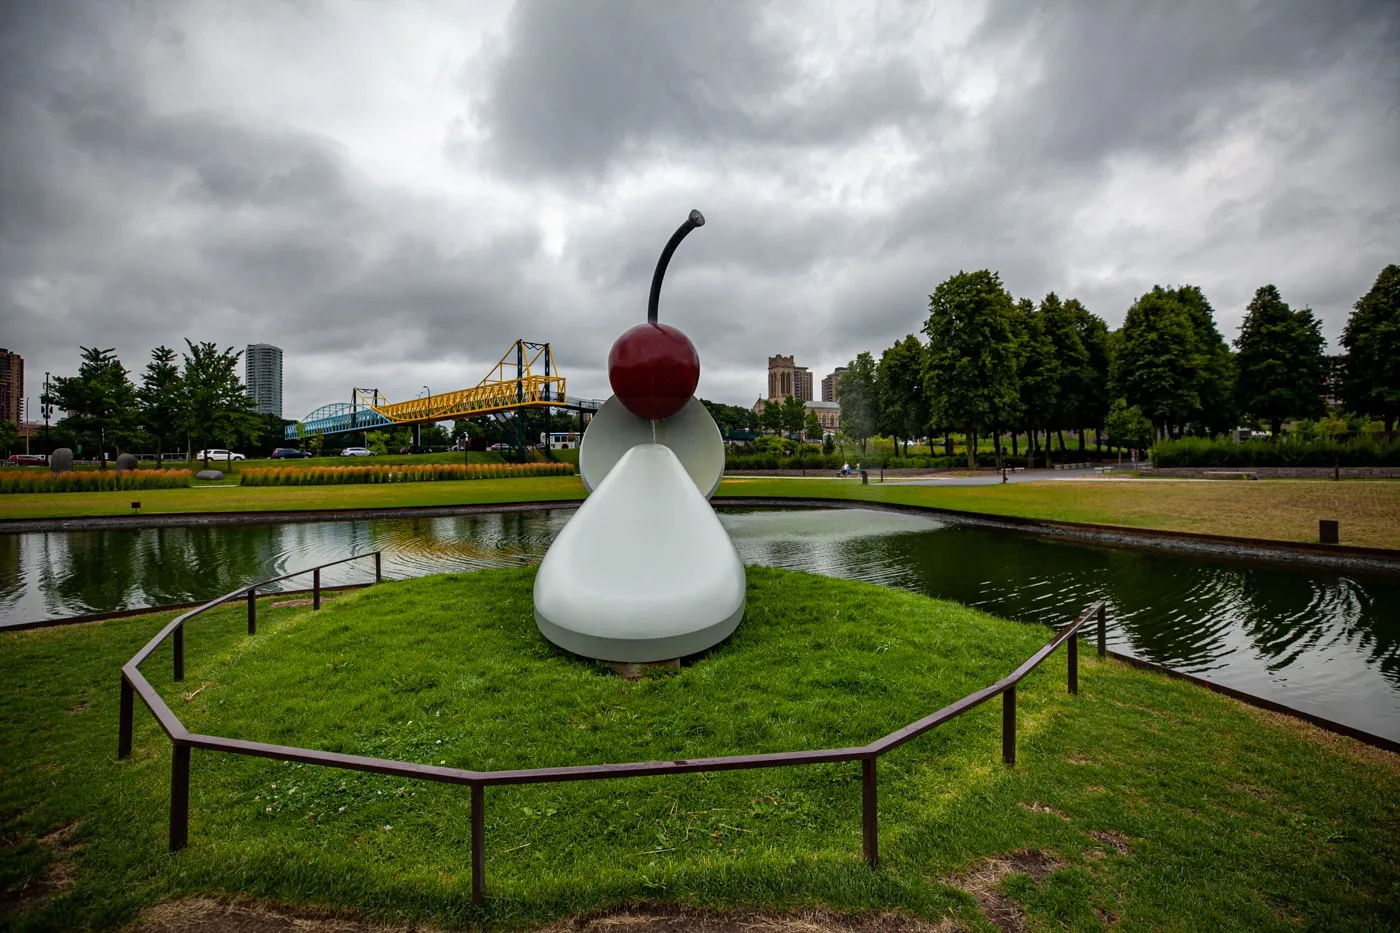 Spoonbridge and Cherry sculpture in Minneapolis, Minnesota | Giant Spoon and Cherry Roadside Attraction at Minneapolis Sculpture Garden in Minnesota